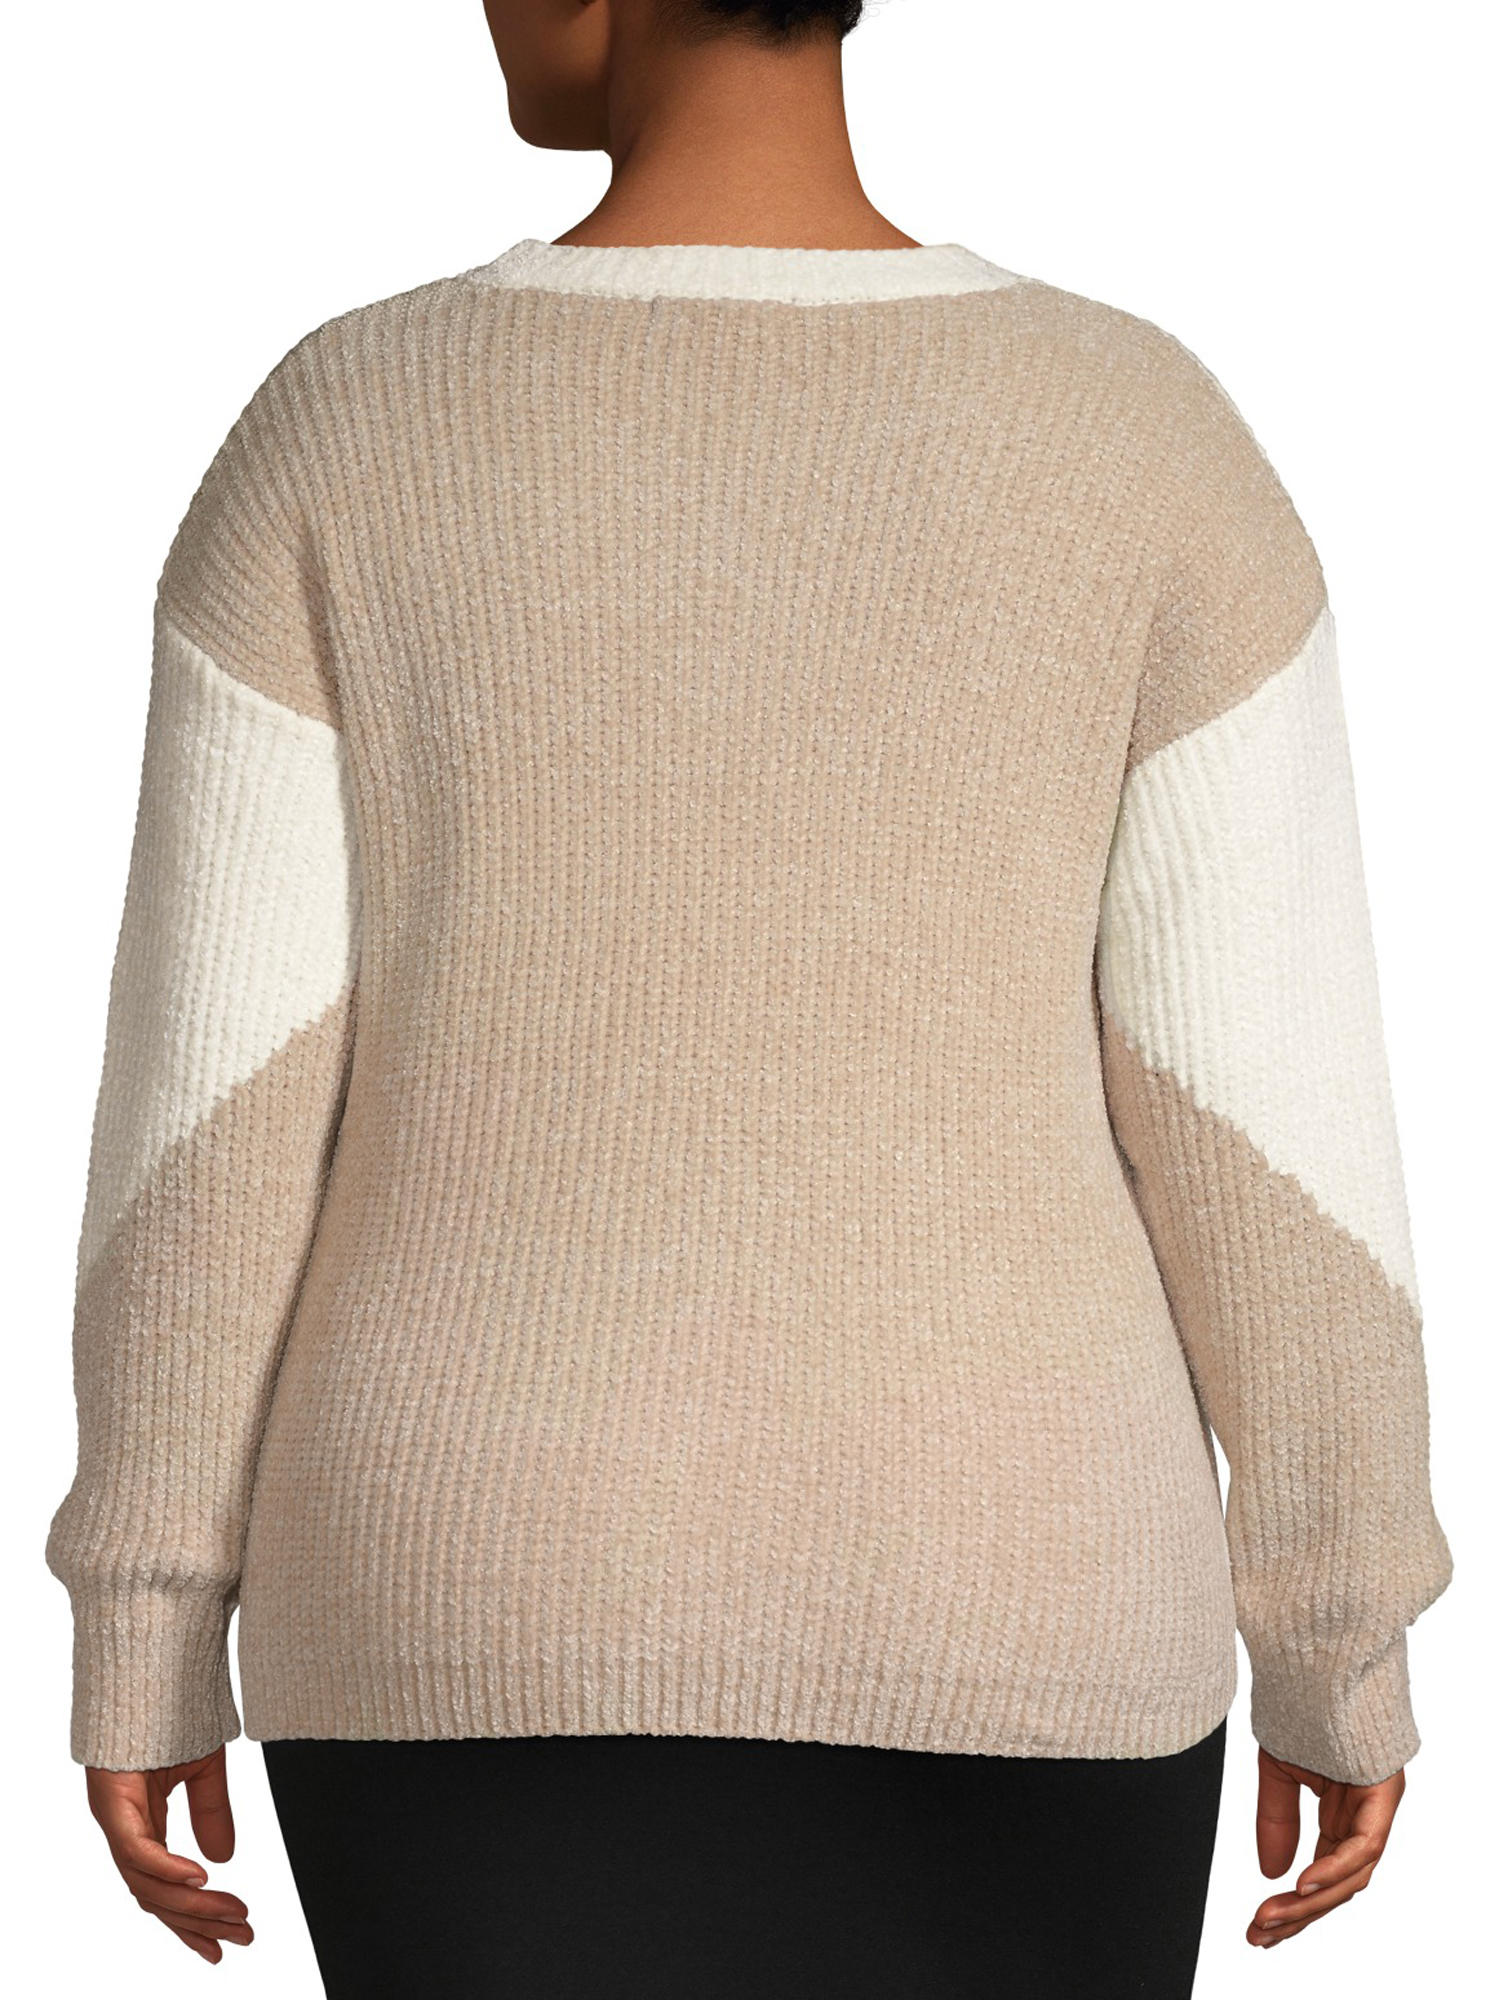 Heart & Crush Women's Plus Size Chenille Color Block Pullover - image 5 of 7